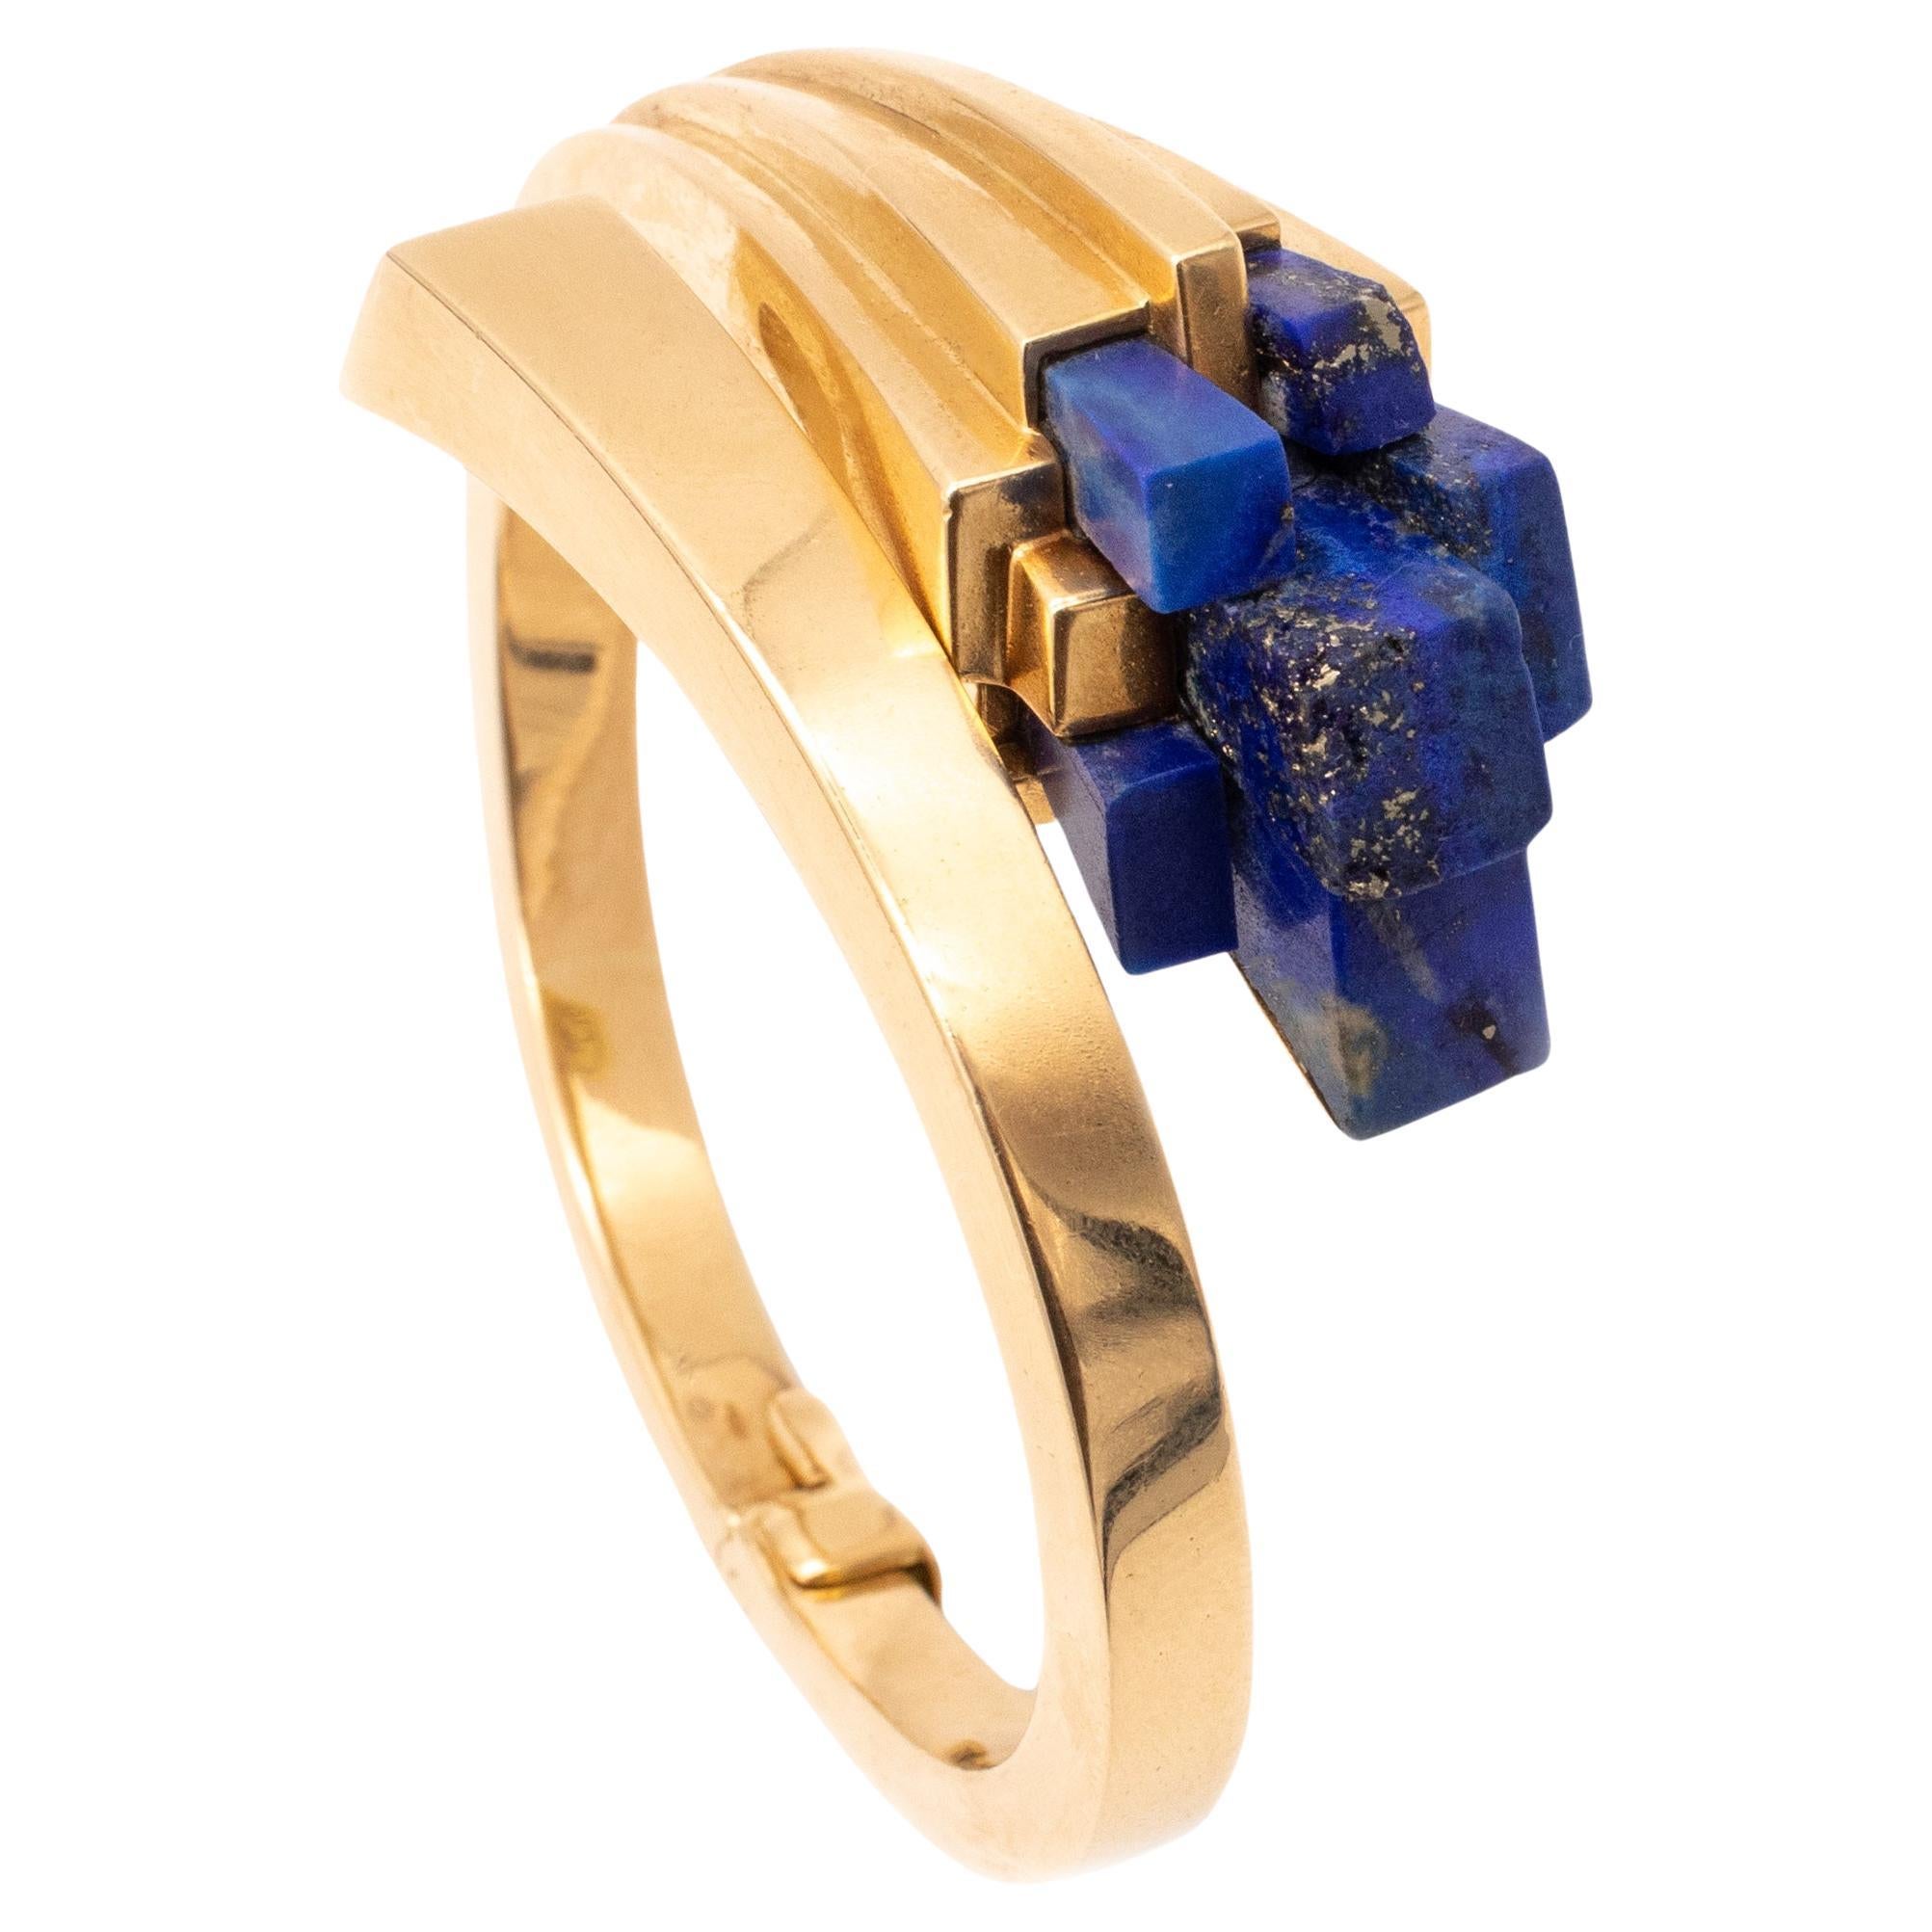 Mellerio 1970 Paris Very Rare Geometric Bracelet In 18Kt Gold With Lapis Lazuli